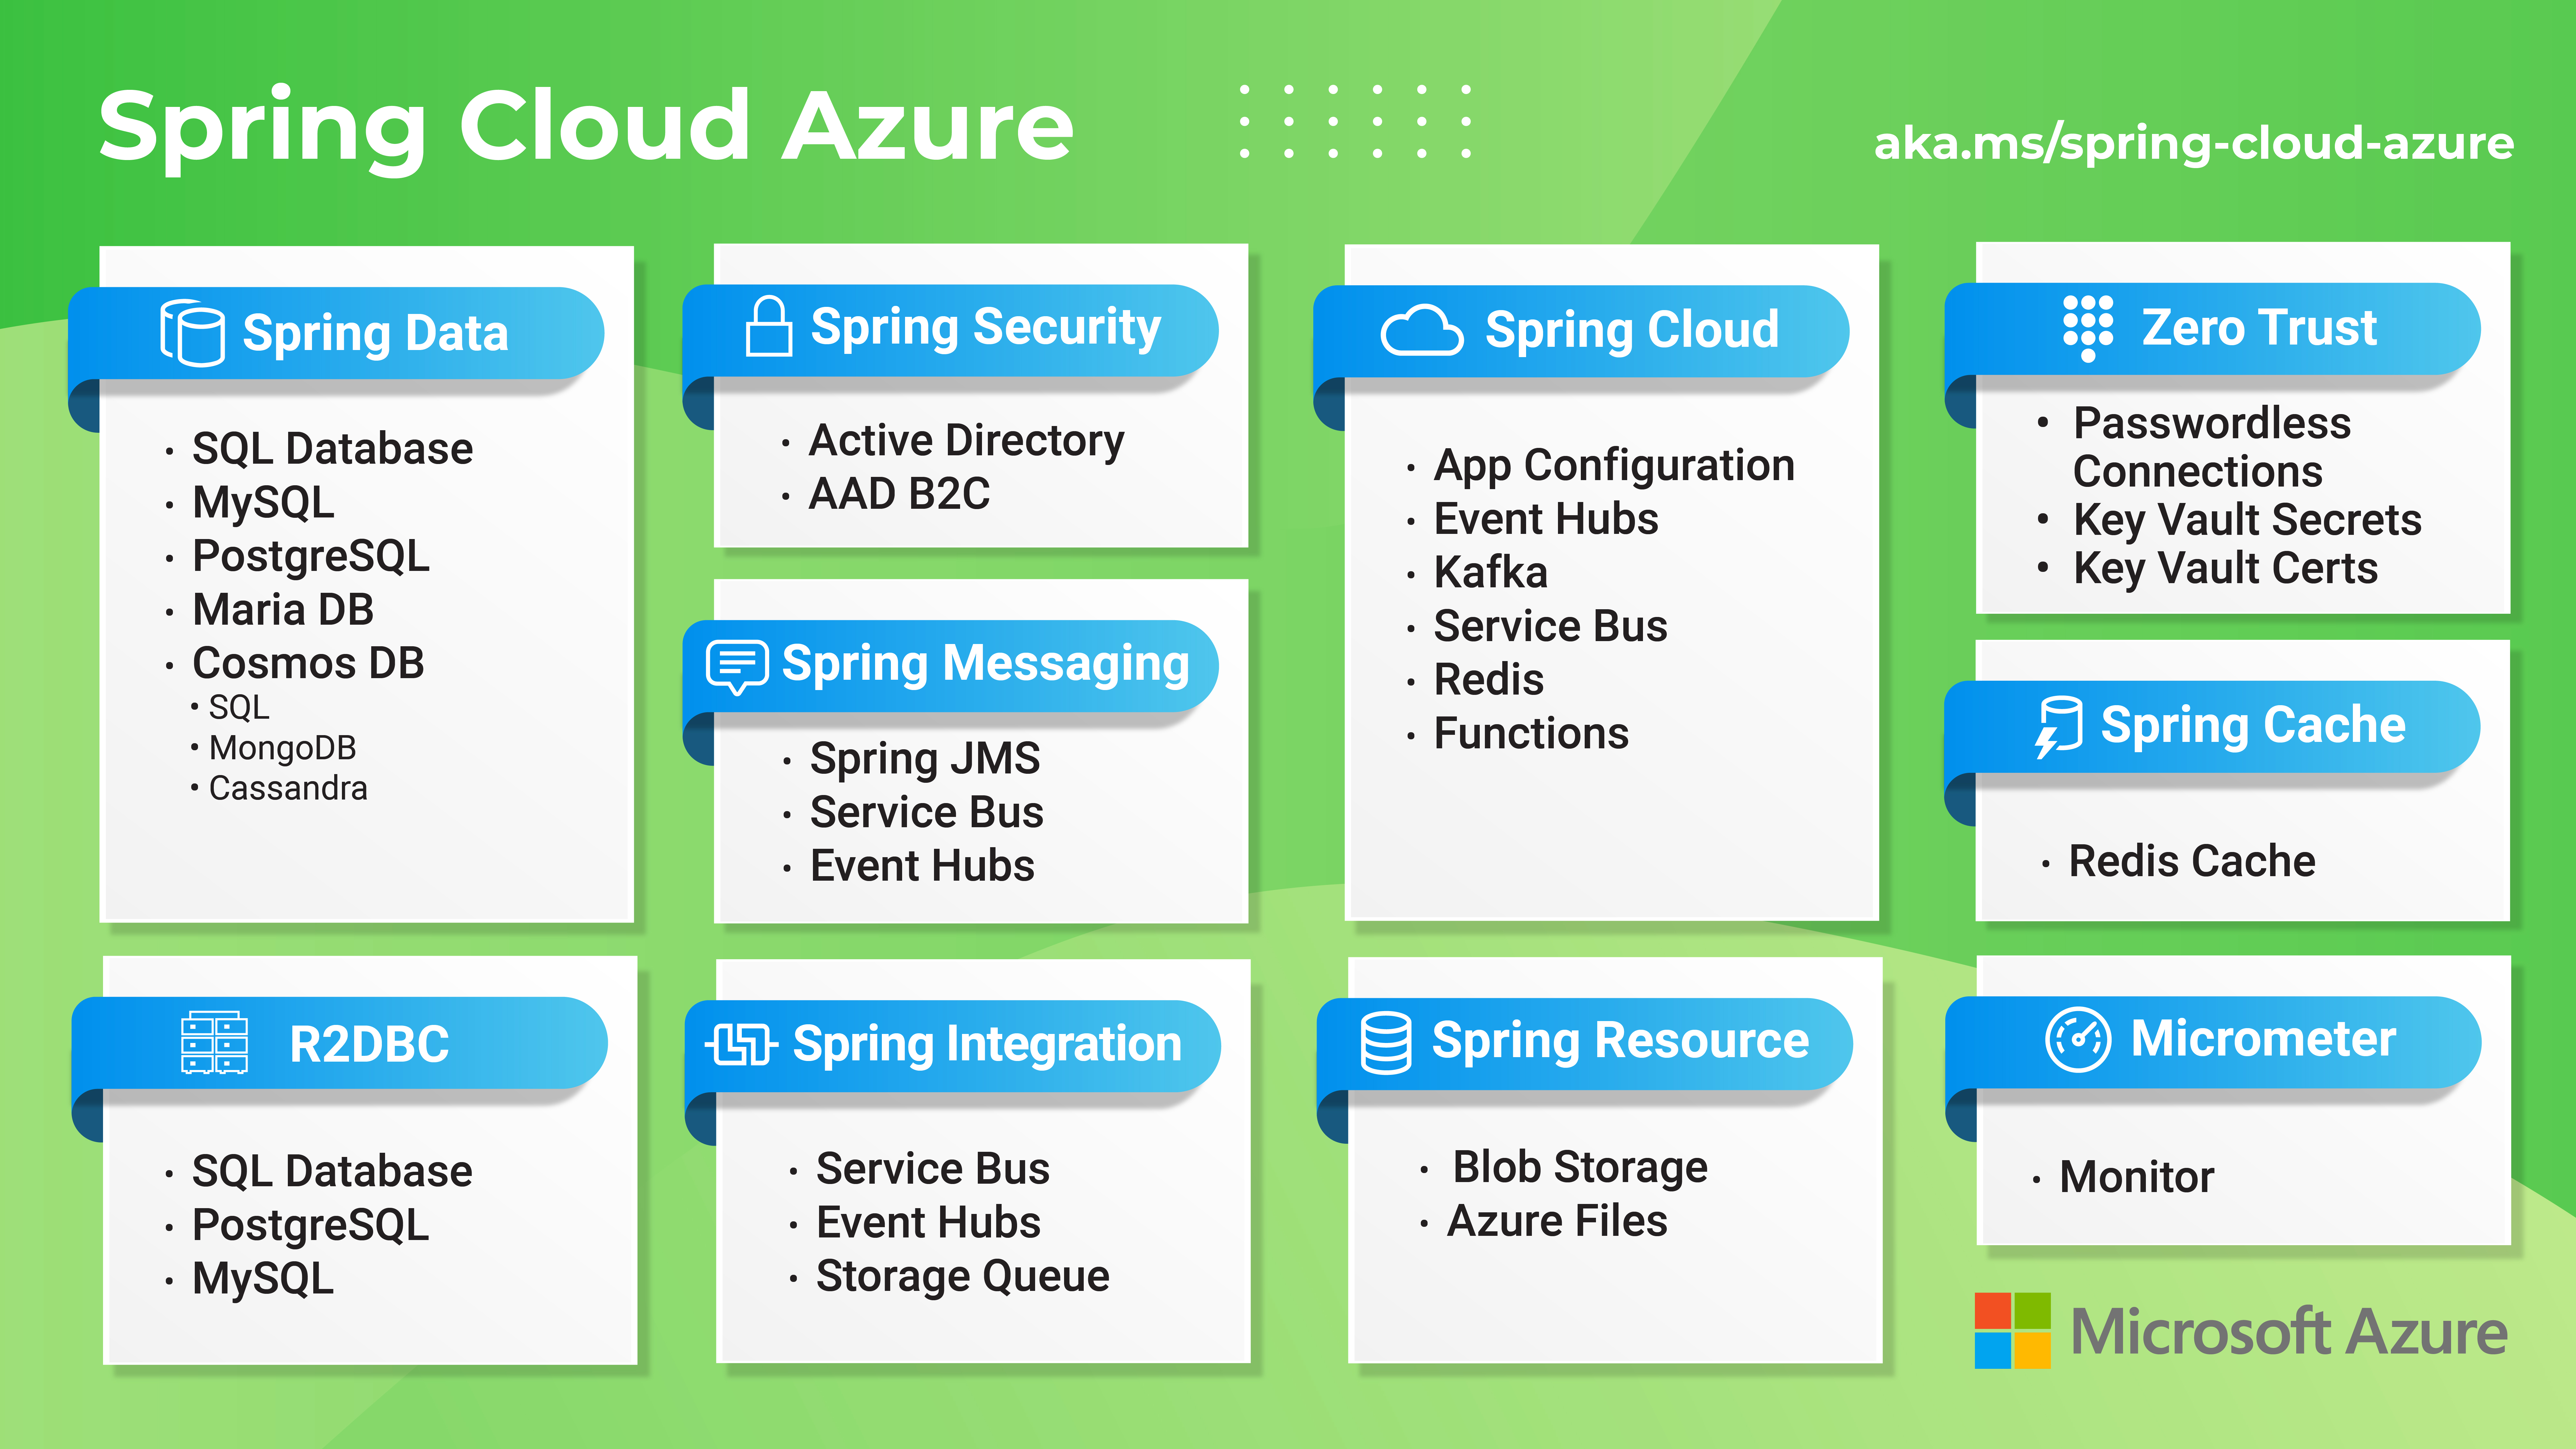 Spring Cloud Azure 기능에 대한 개요를 제공하는 다이어그램